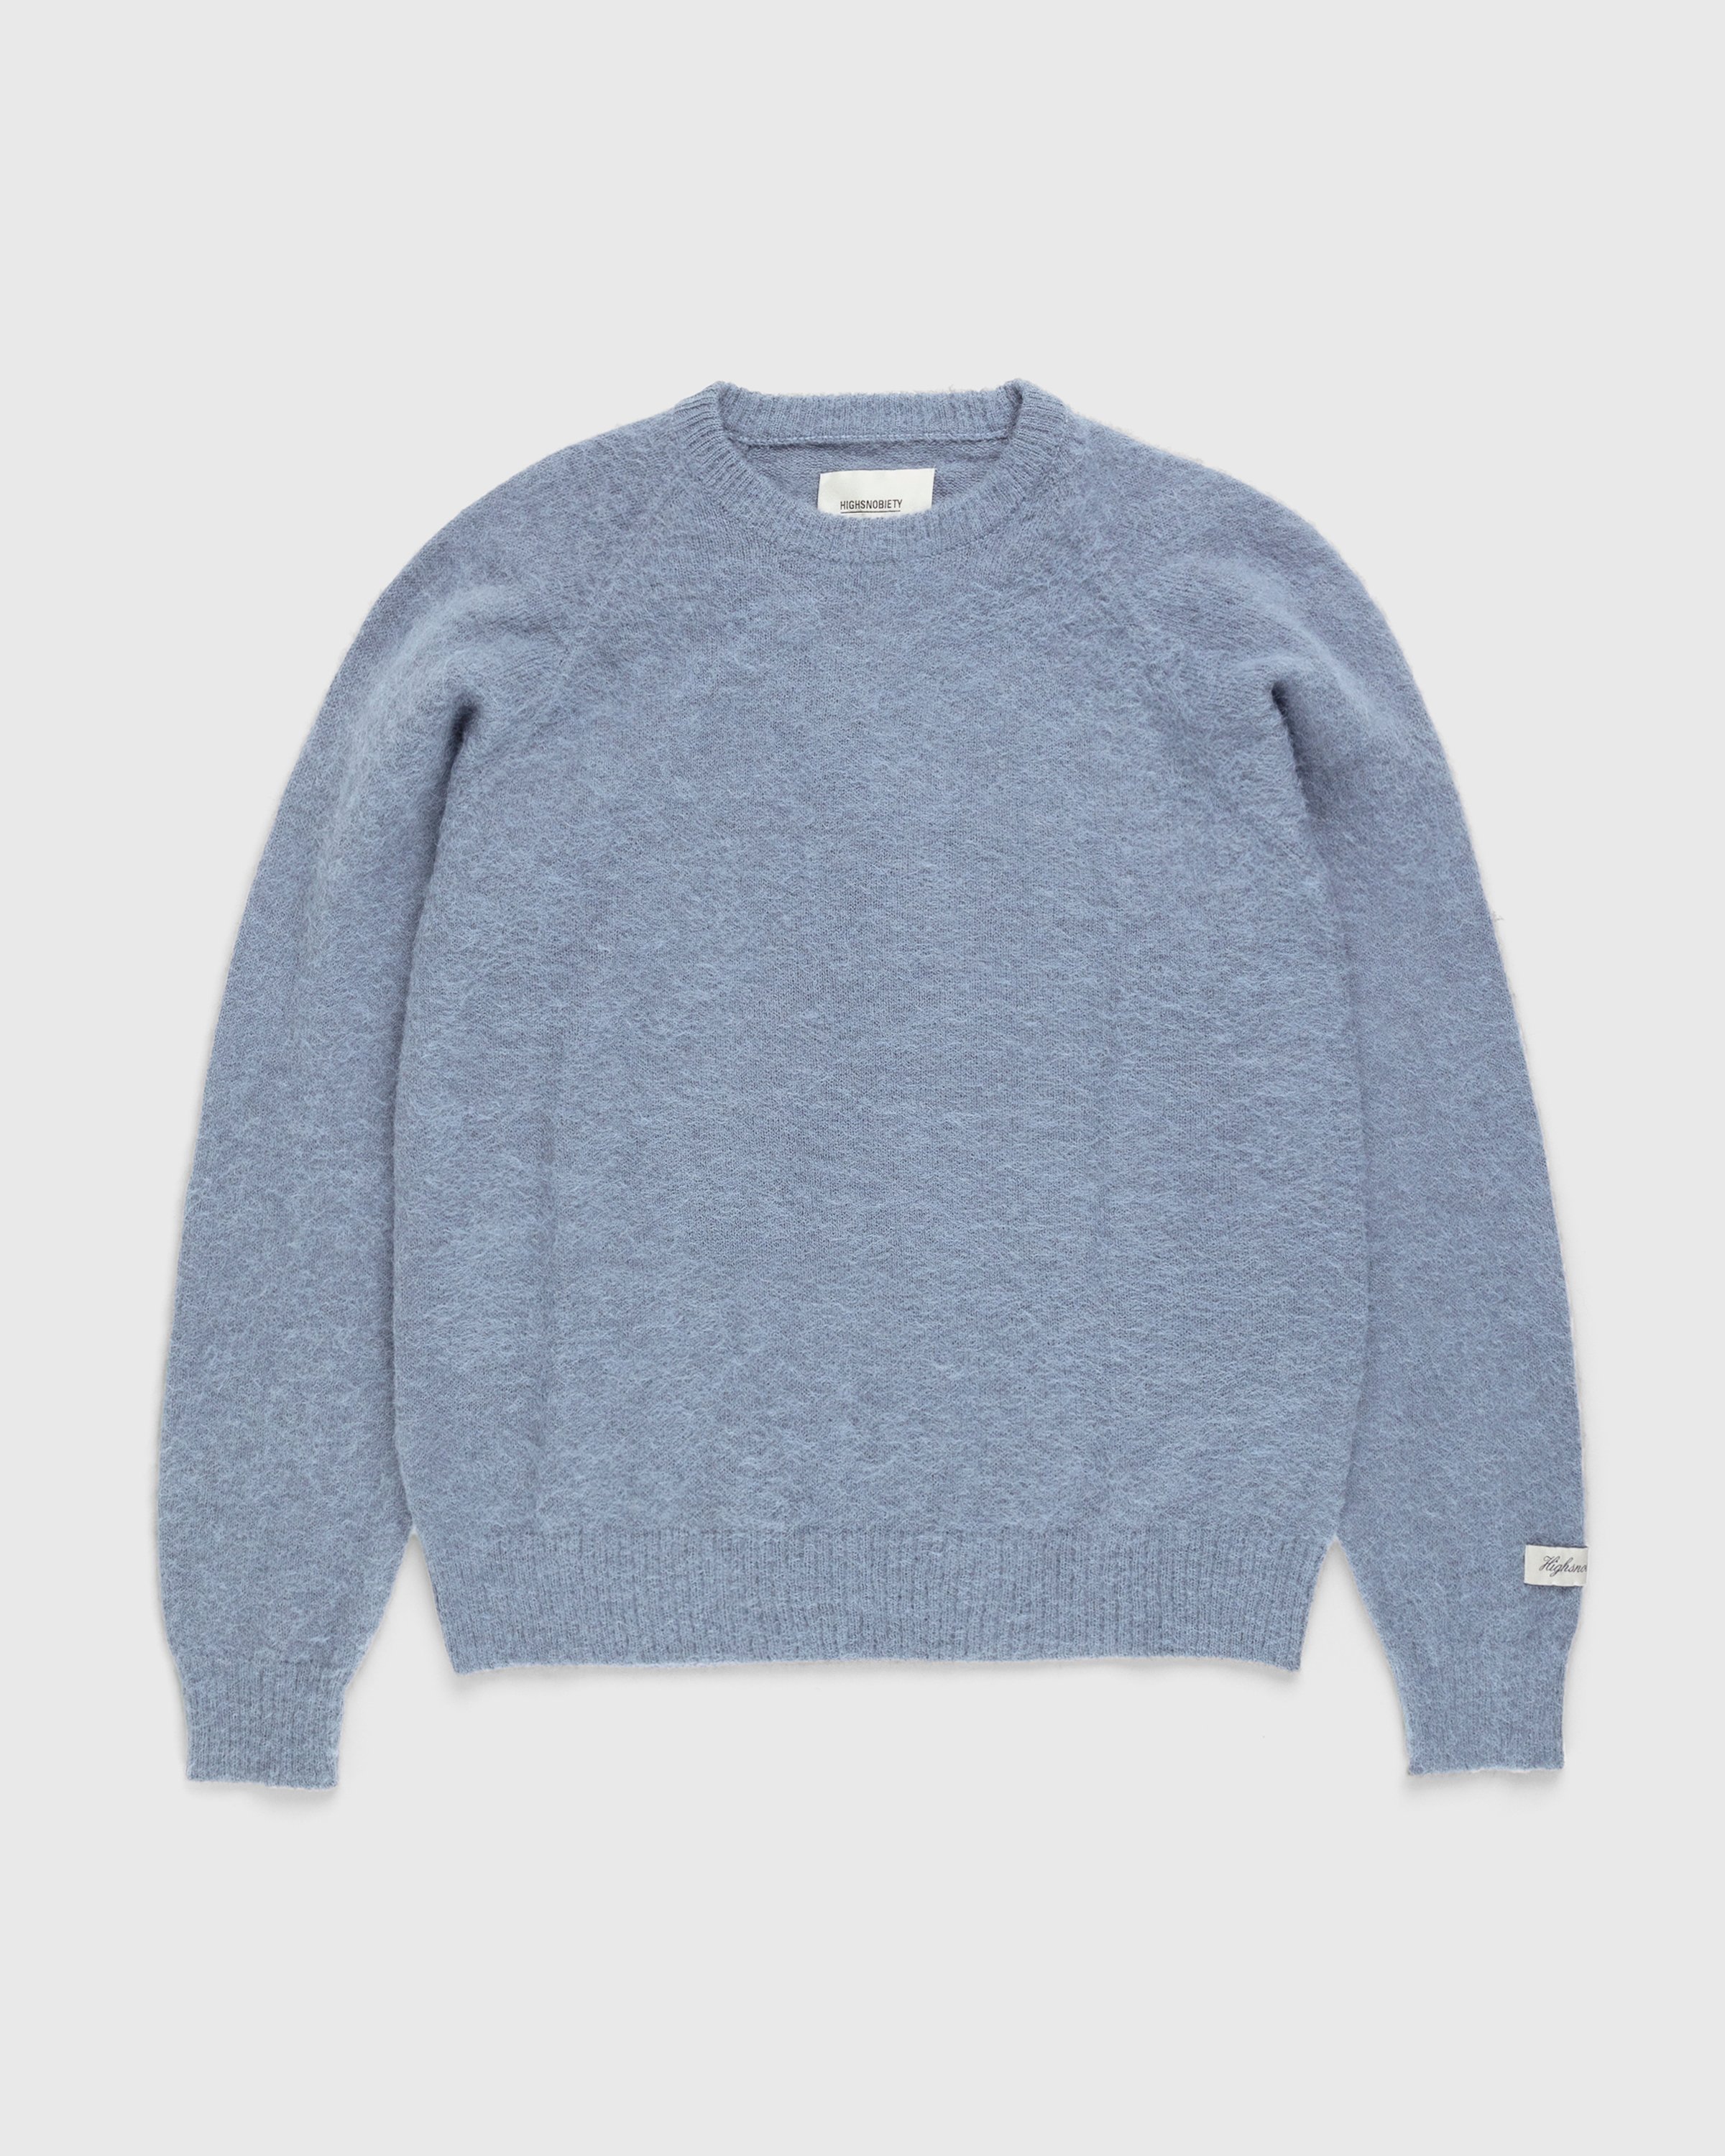 Blue and ecru Alpa sweater, V-neck printed sweater